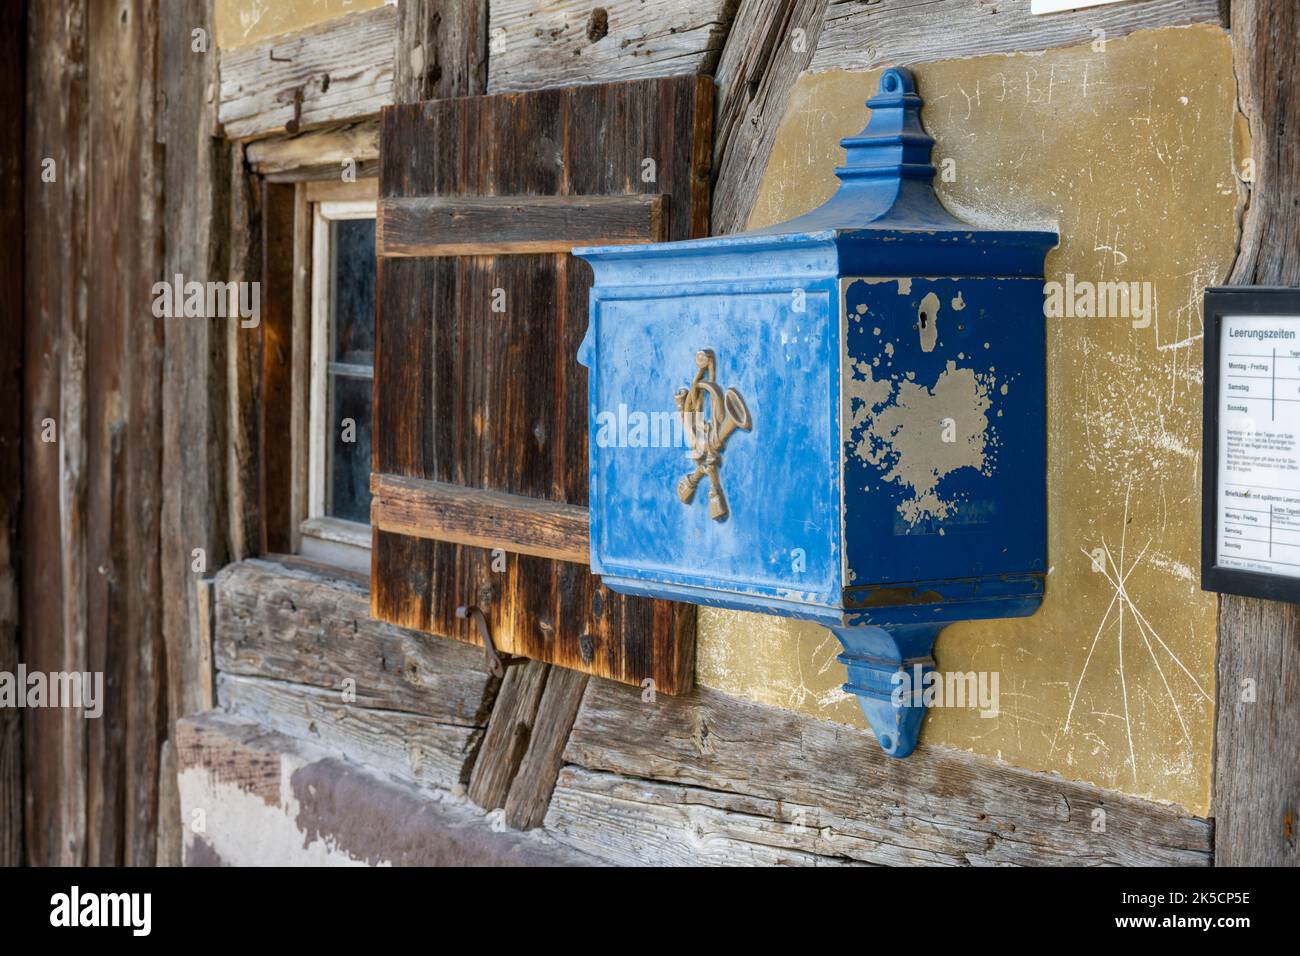 Germania, Baviera, Bad Windsheim, vecchia cassetta postale blu. Foto Stock